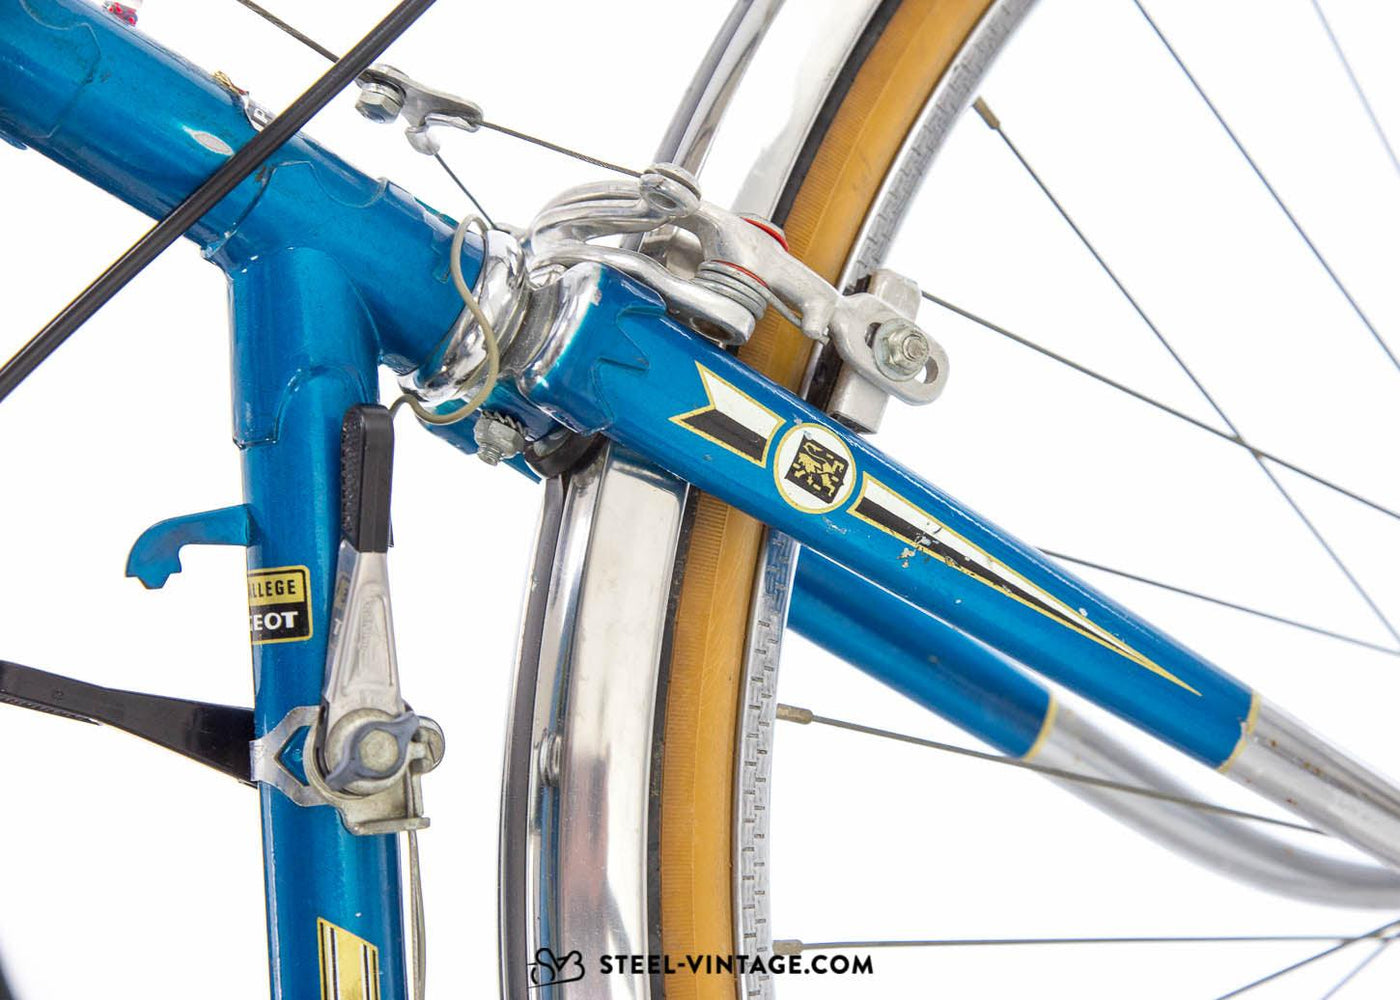 Peugeot Mixte Classic Ladies Dark Turquoise Bike 1970s - Steel Vintage Bikes